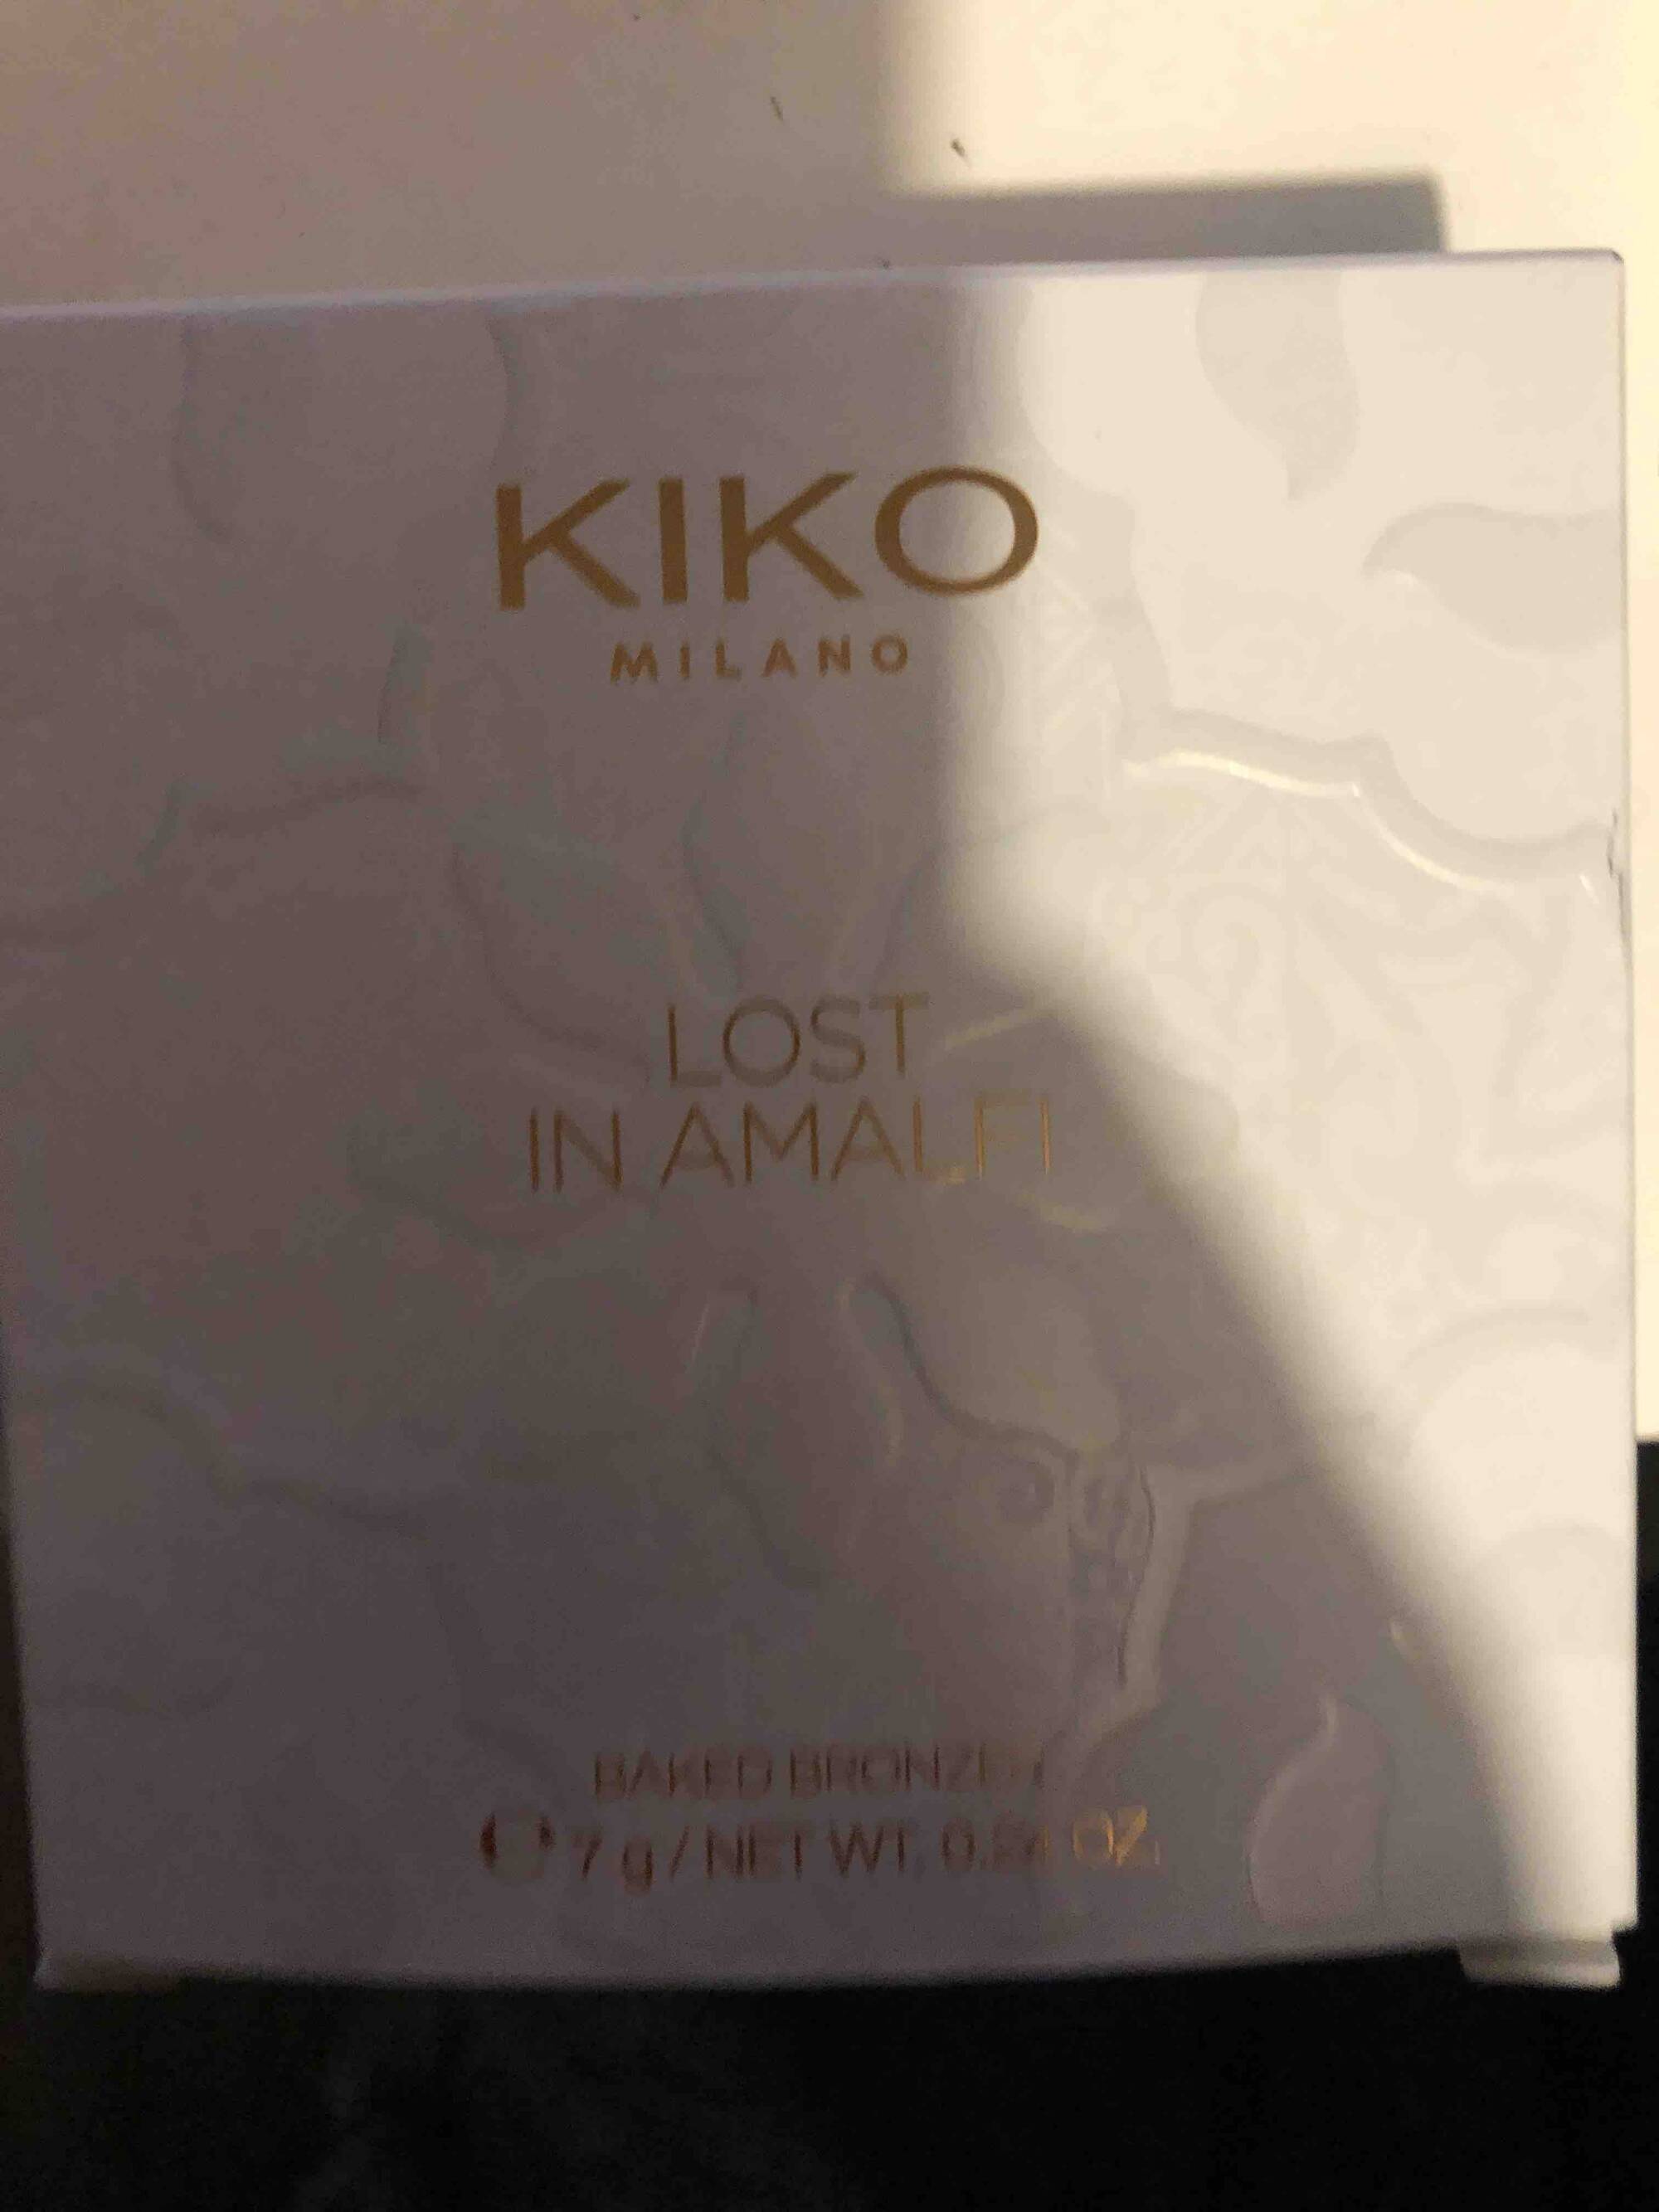 KIKO - Lost in Amalfi - Baked bronzer 02